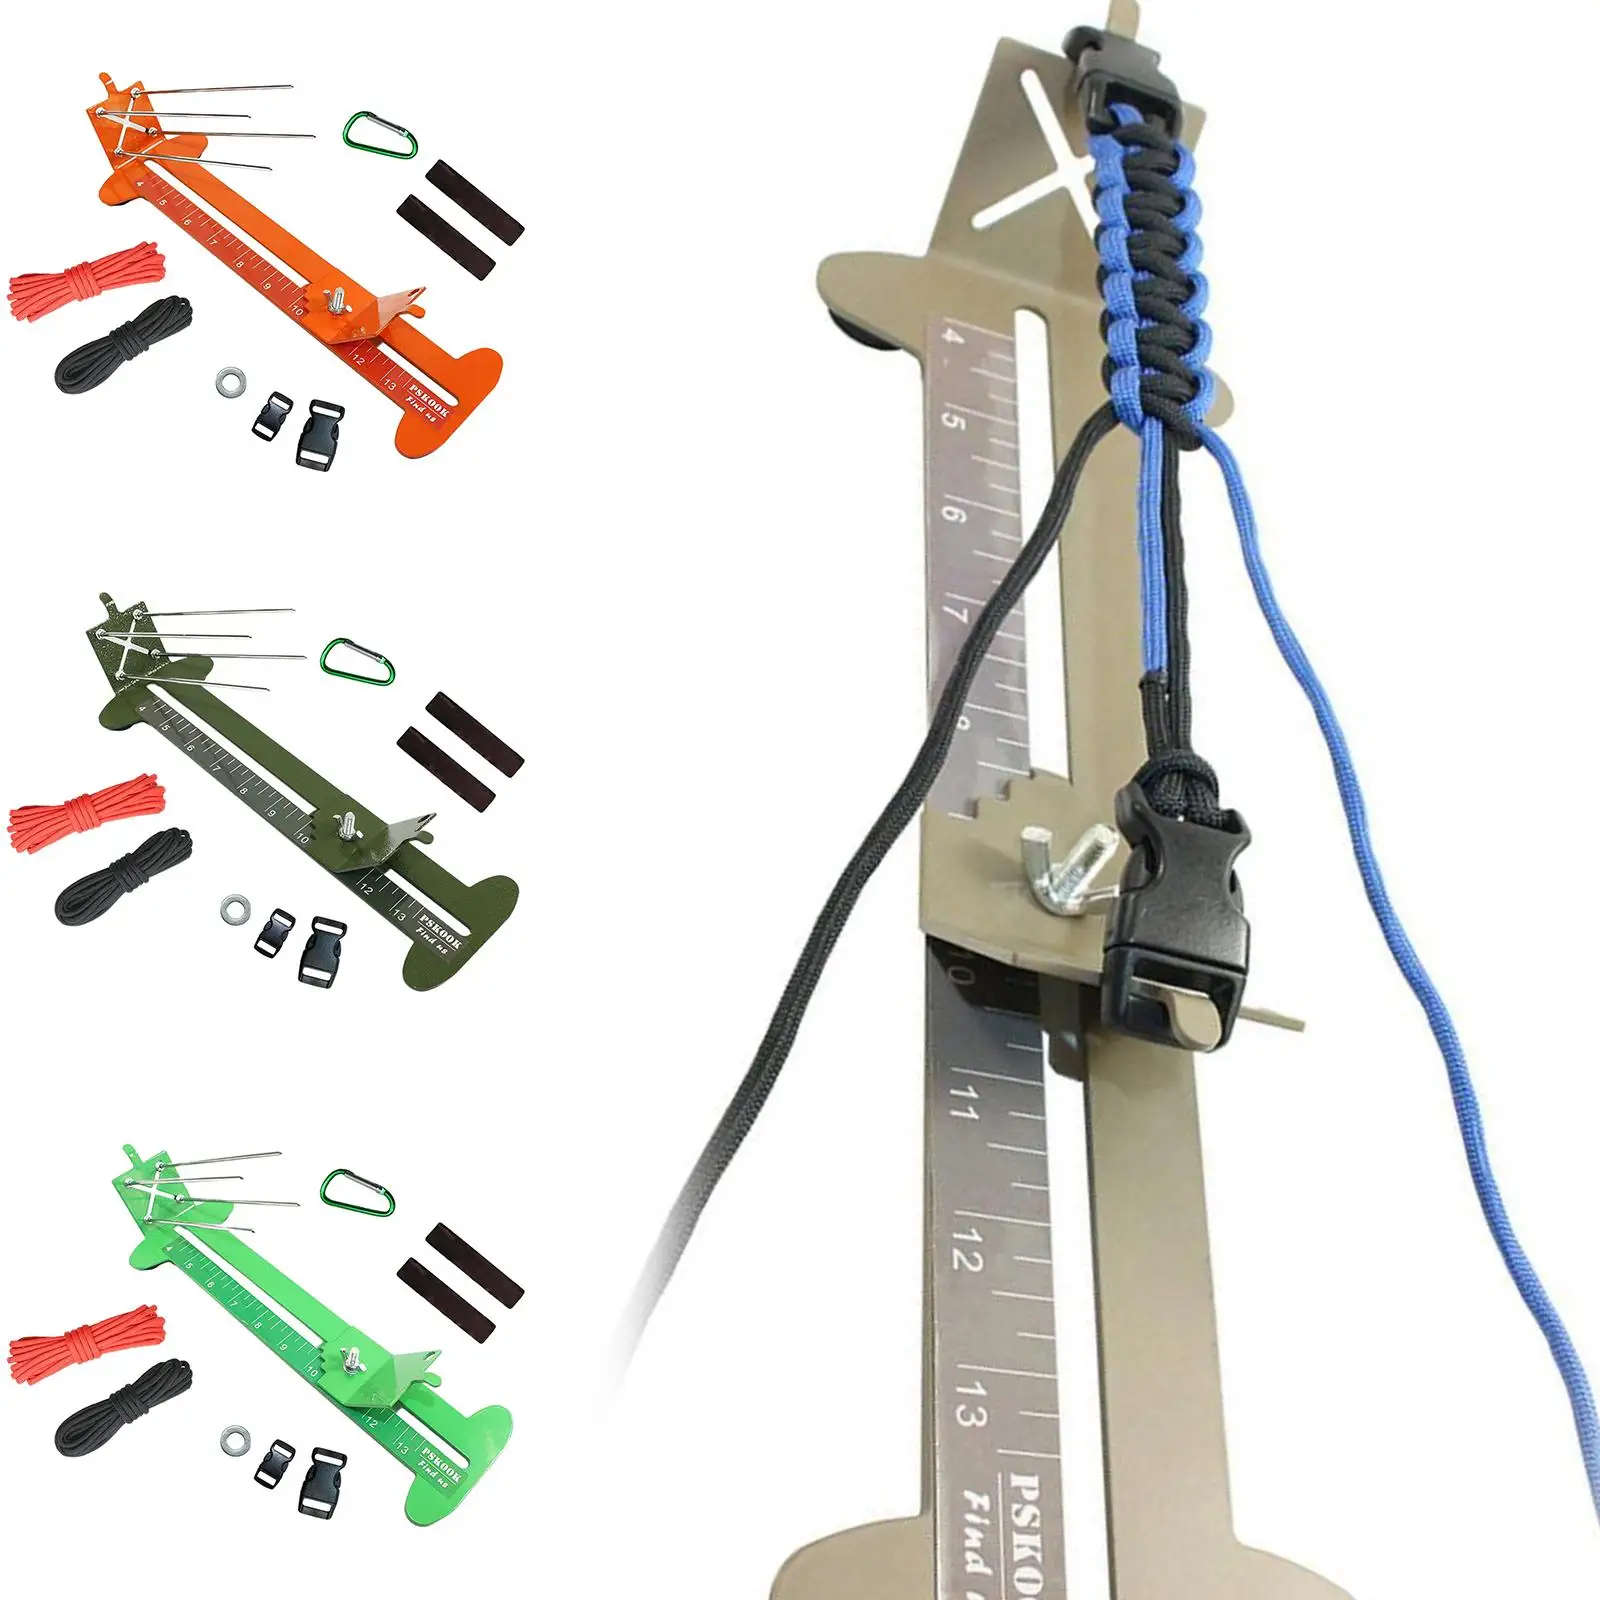 Paracordaa Bracelet Jig Kit for Paracordaa or Leather Work Paracordaa Tool Adjustable Length Paracordaa Jig Bracelet Maker